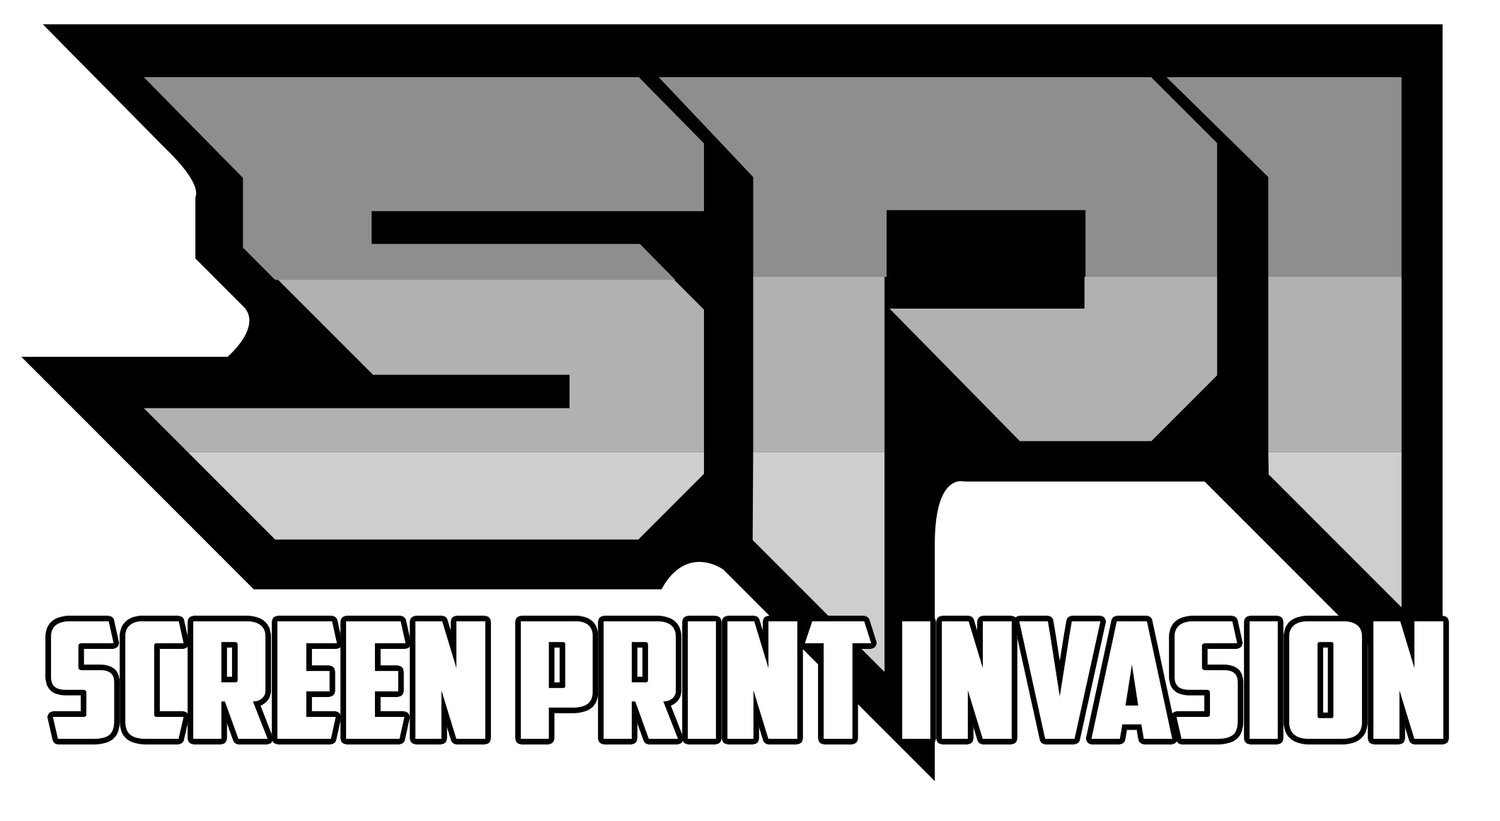 Screen Print Invasion